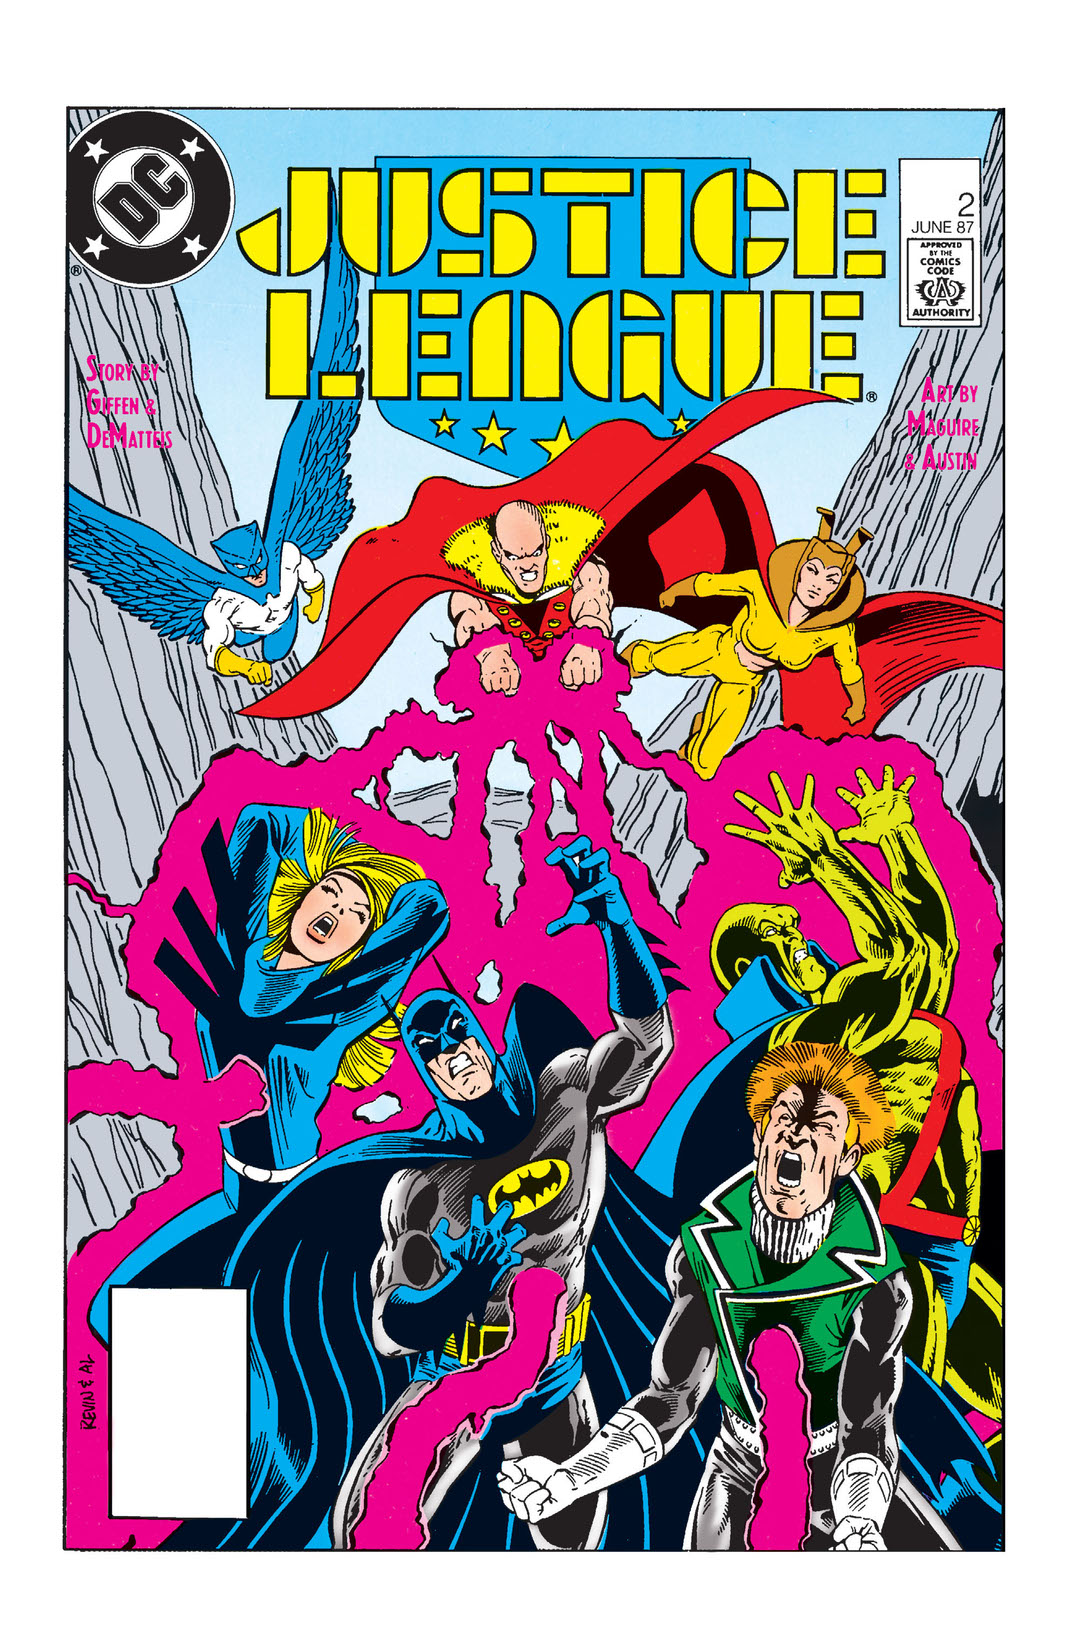 Justice League (1987-1996) #2 preview images